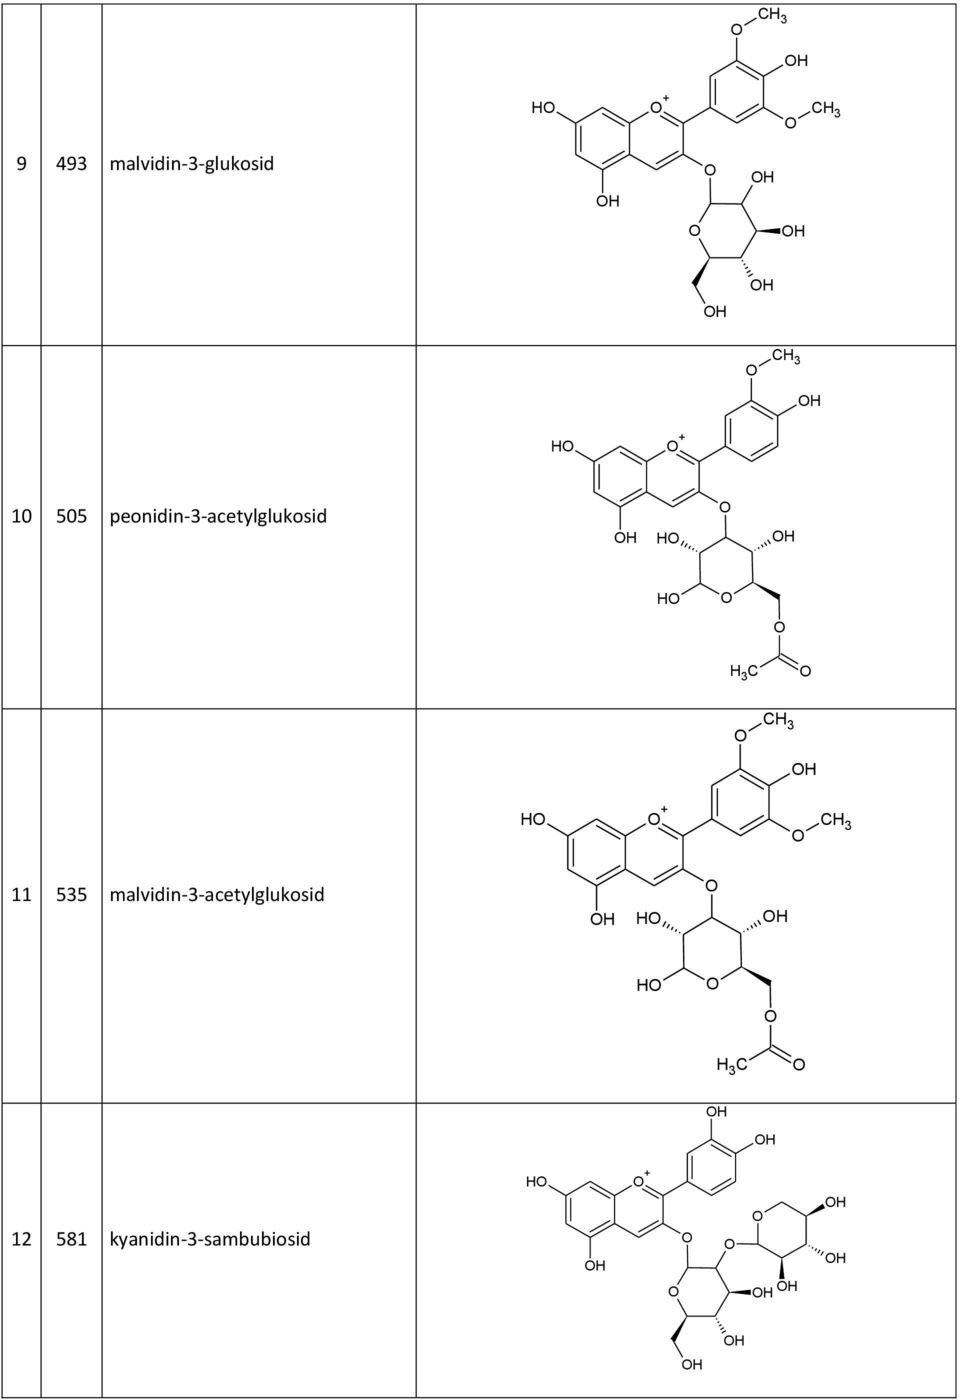 H + 11 535 malvidin-3-acetylglukosid H